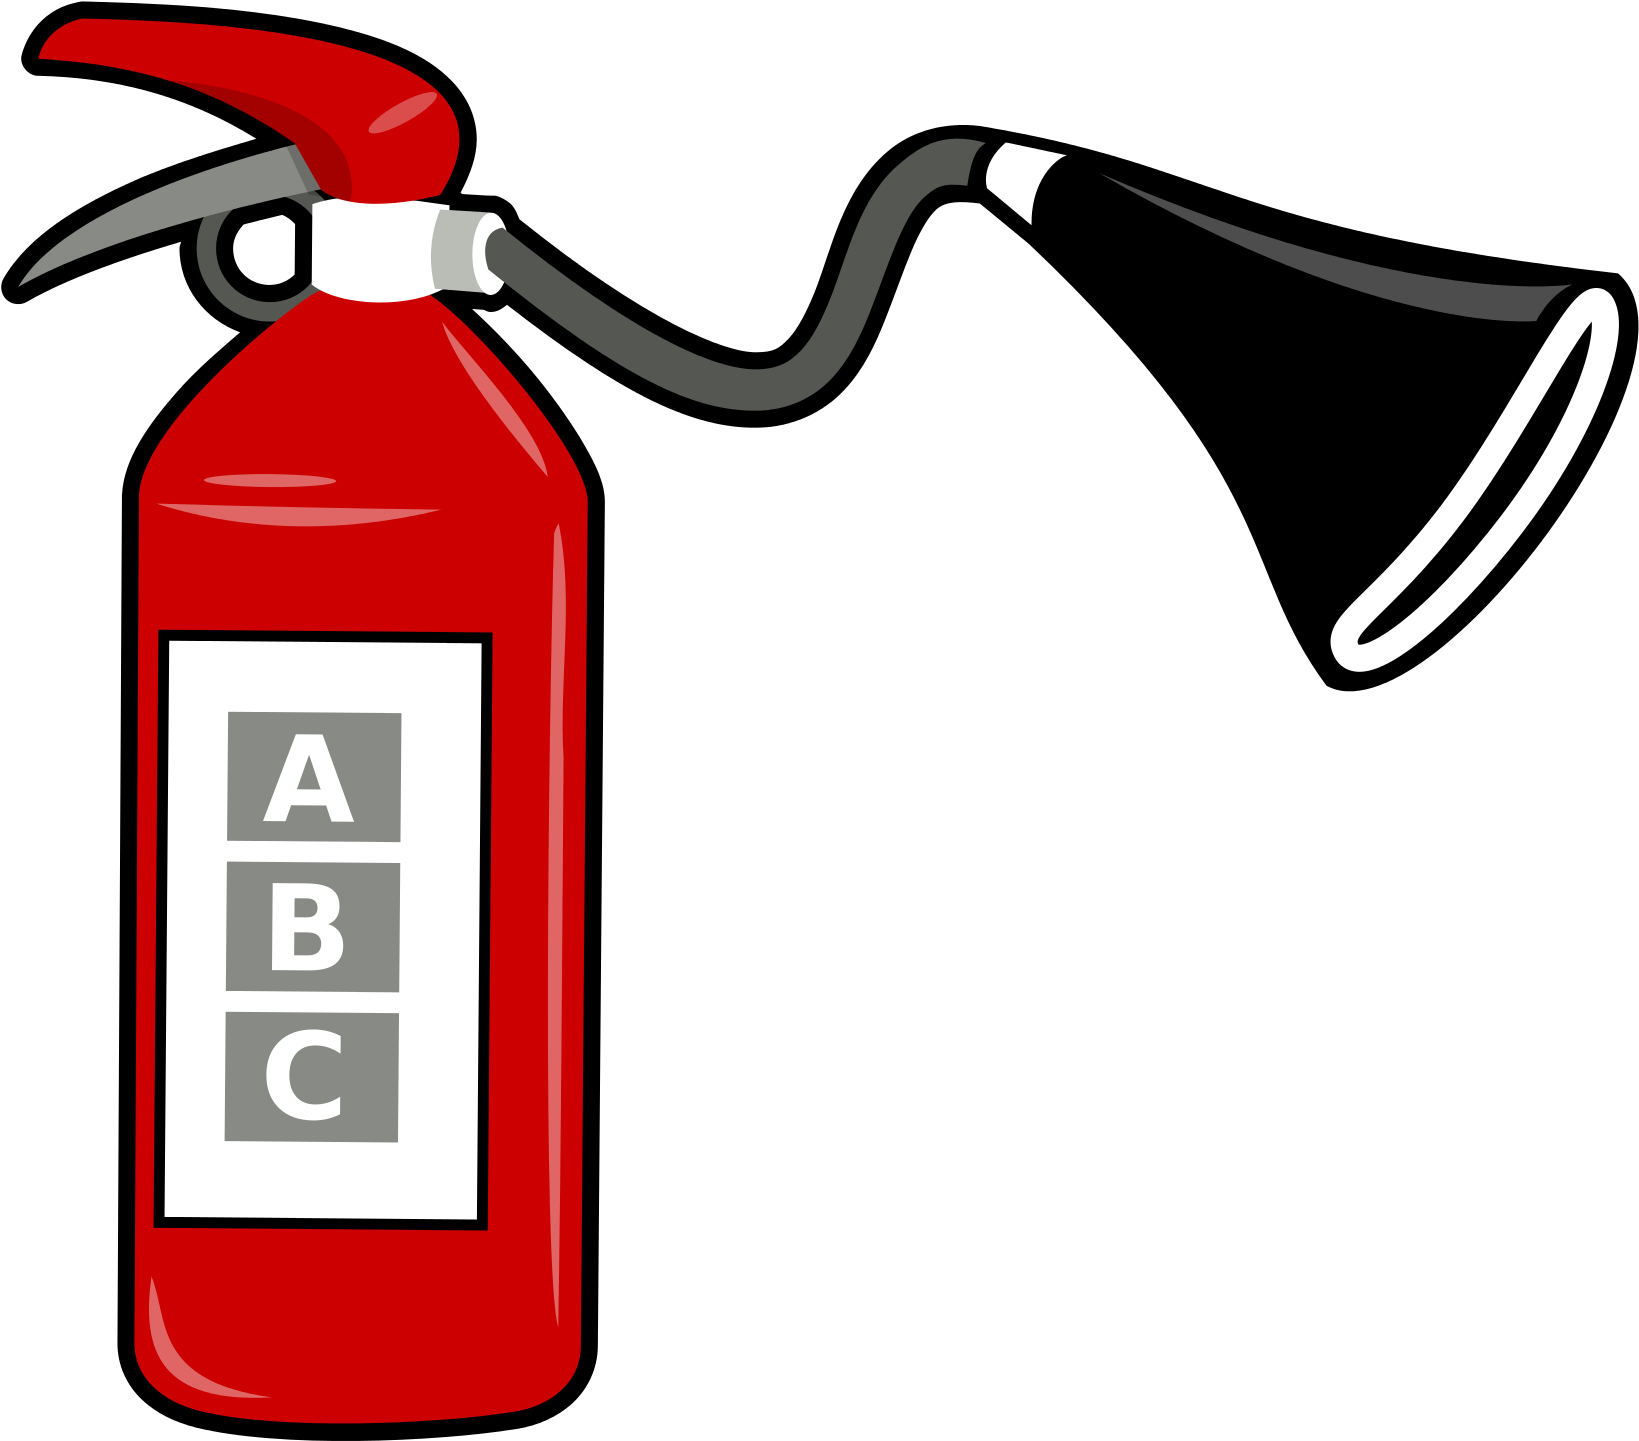 Red Fire Extinguisher Illustration PNG